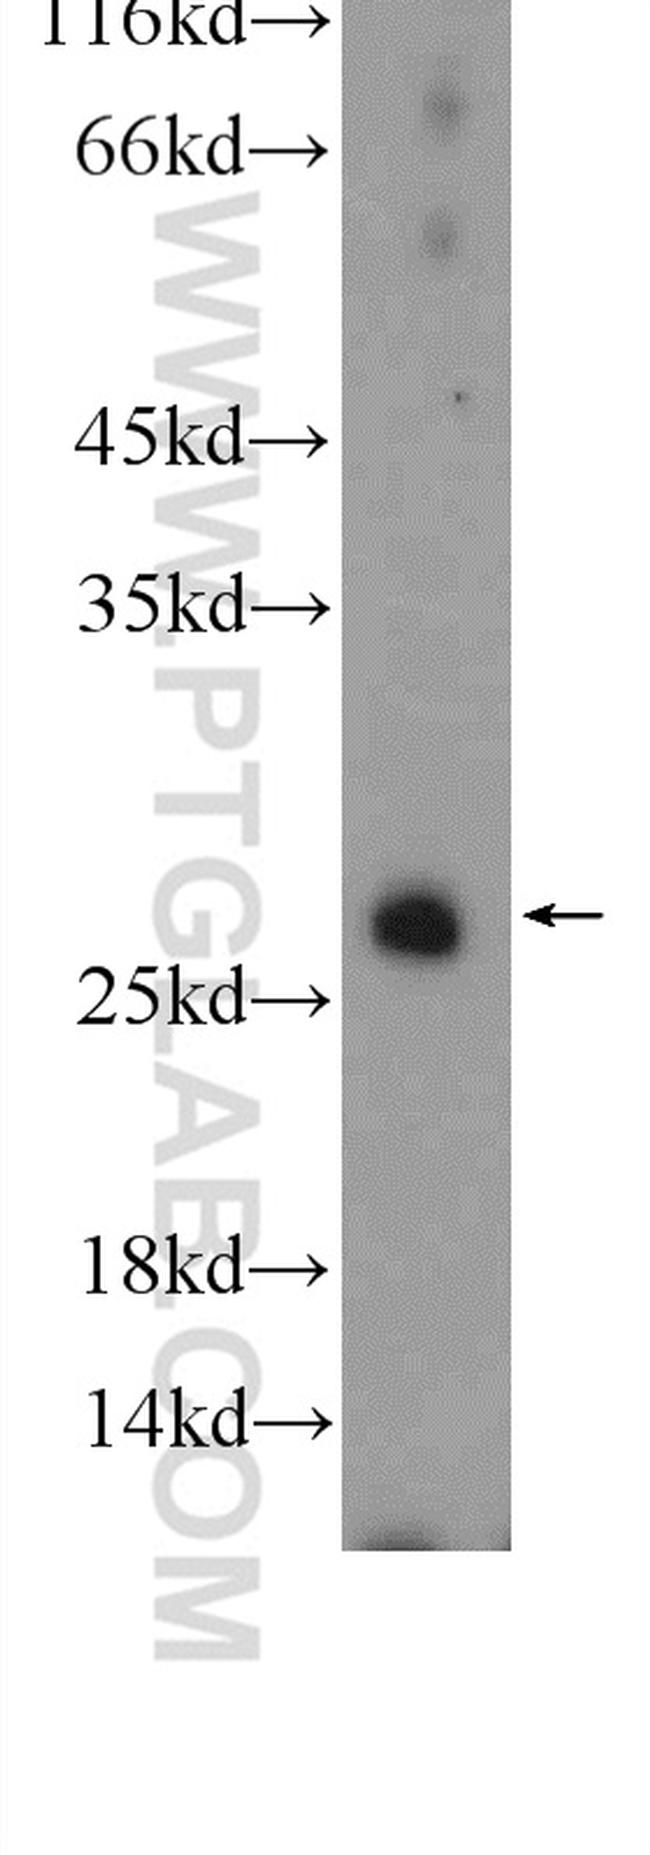 RAB3D Antibody in Western Blot (WB)